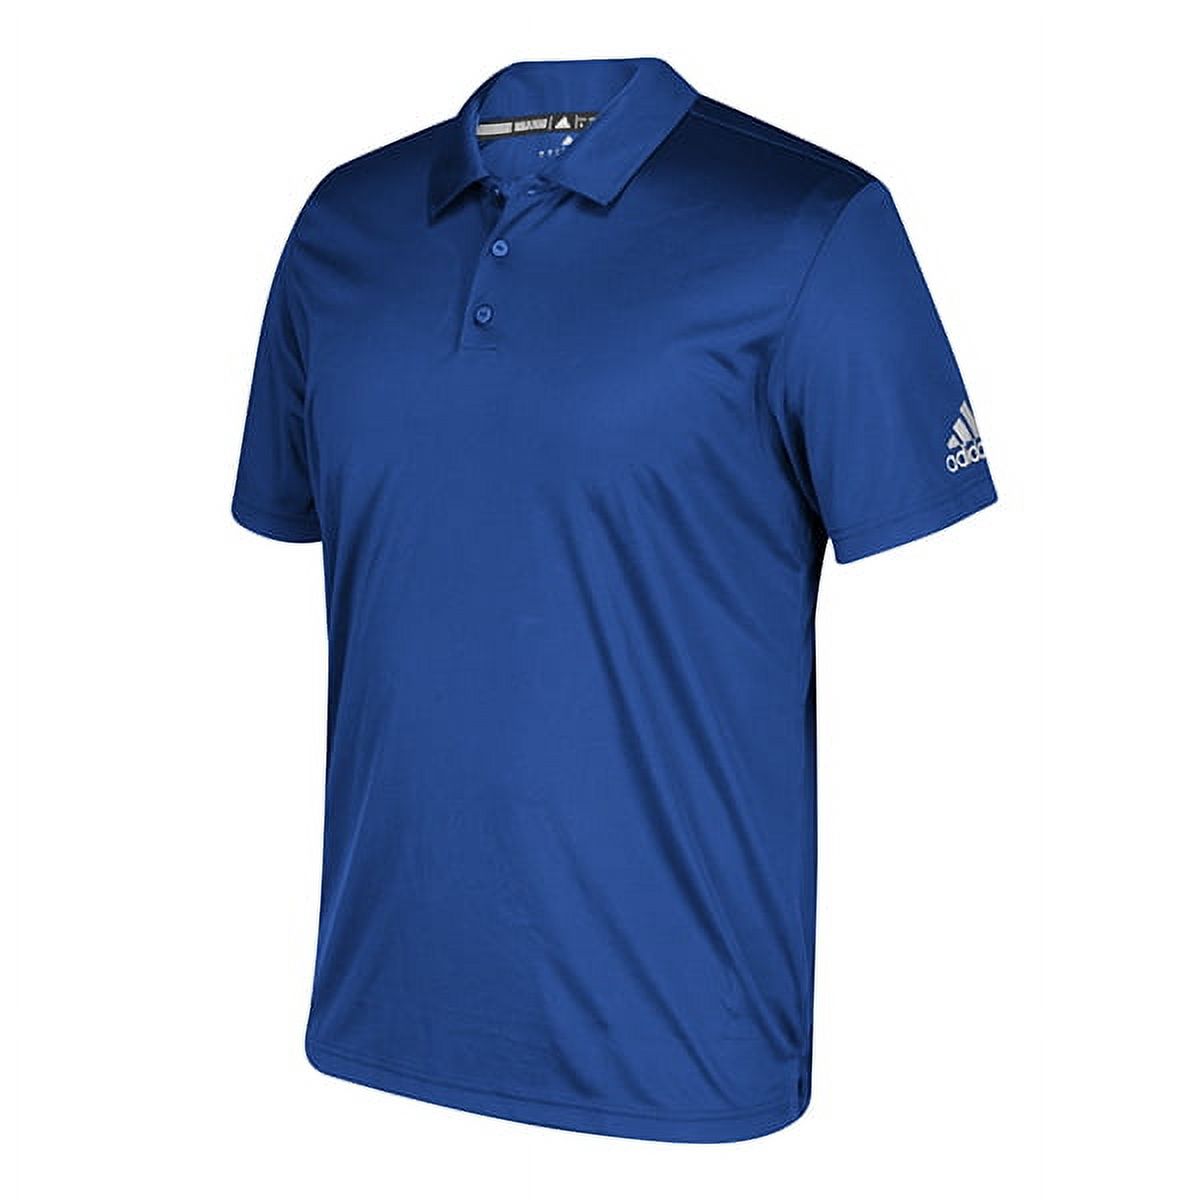 Adidas Men's Grind Climalite Performance Polo Shirt Golf Golfing (Royal, S) - image 1 of 2